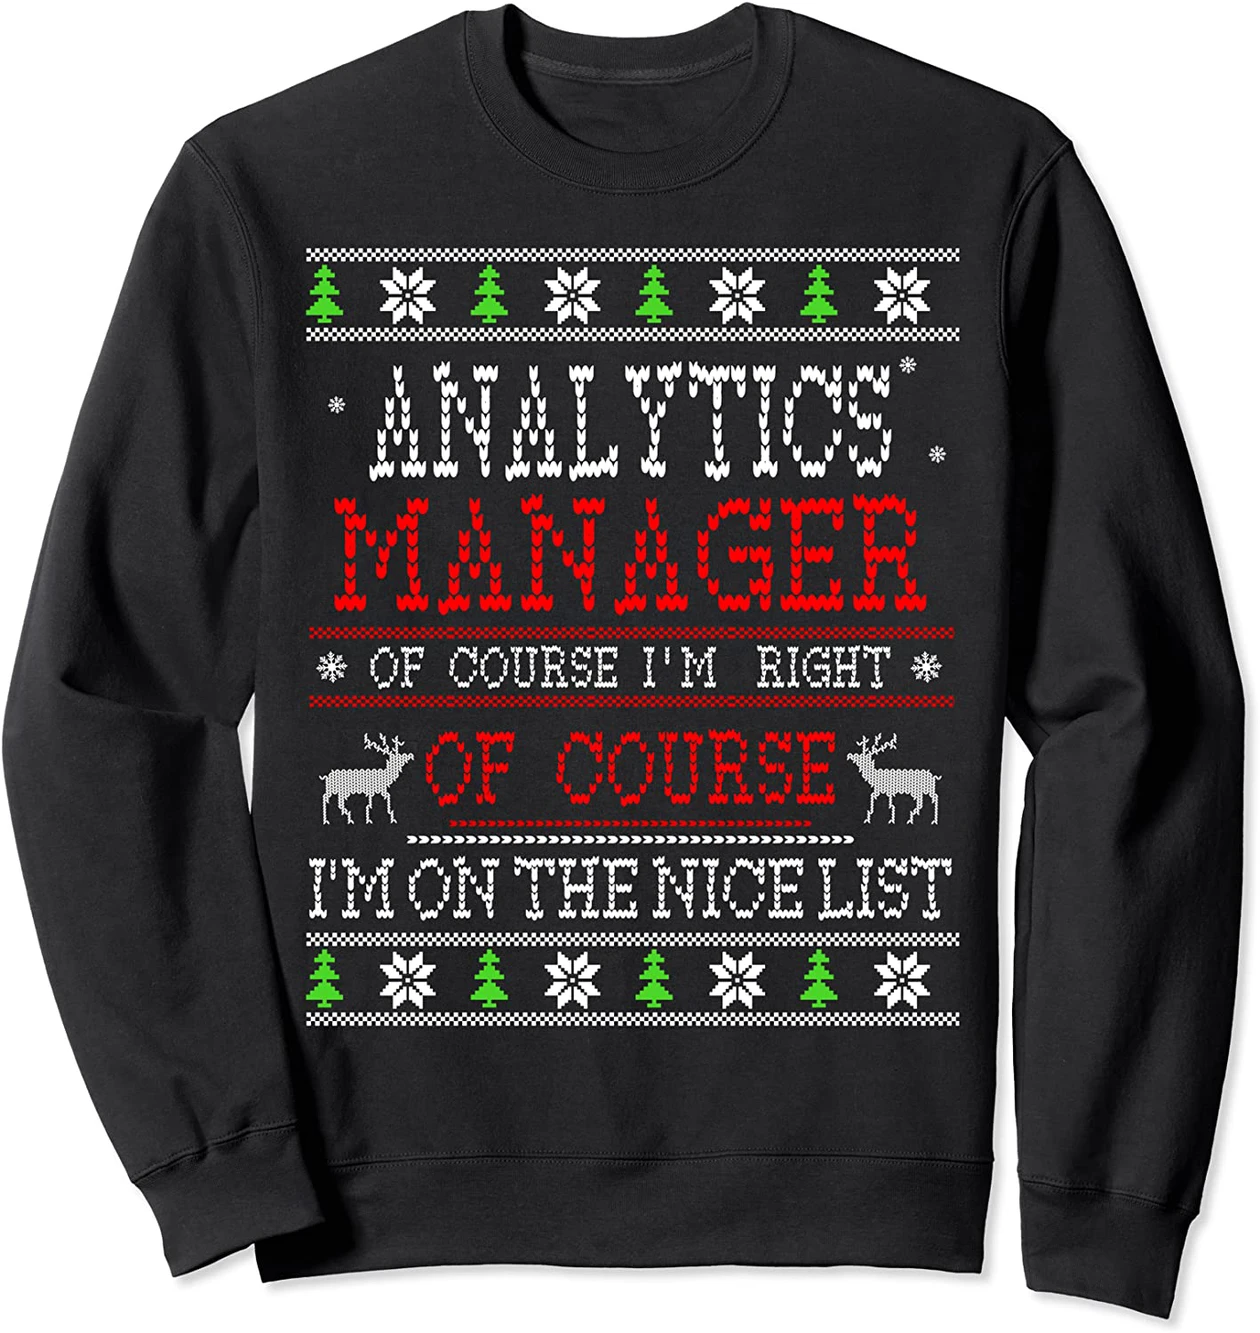 Analytics Manager On The Nice List Ugly Christmas Sweatshirt